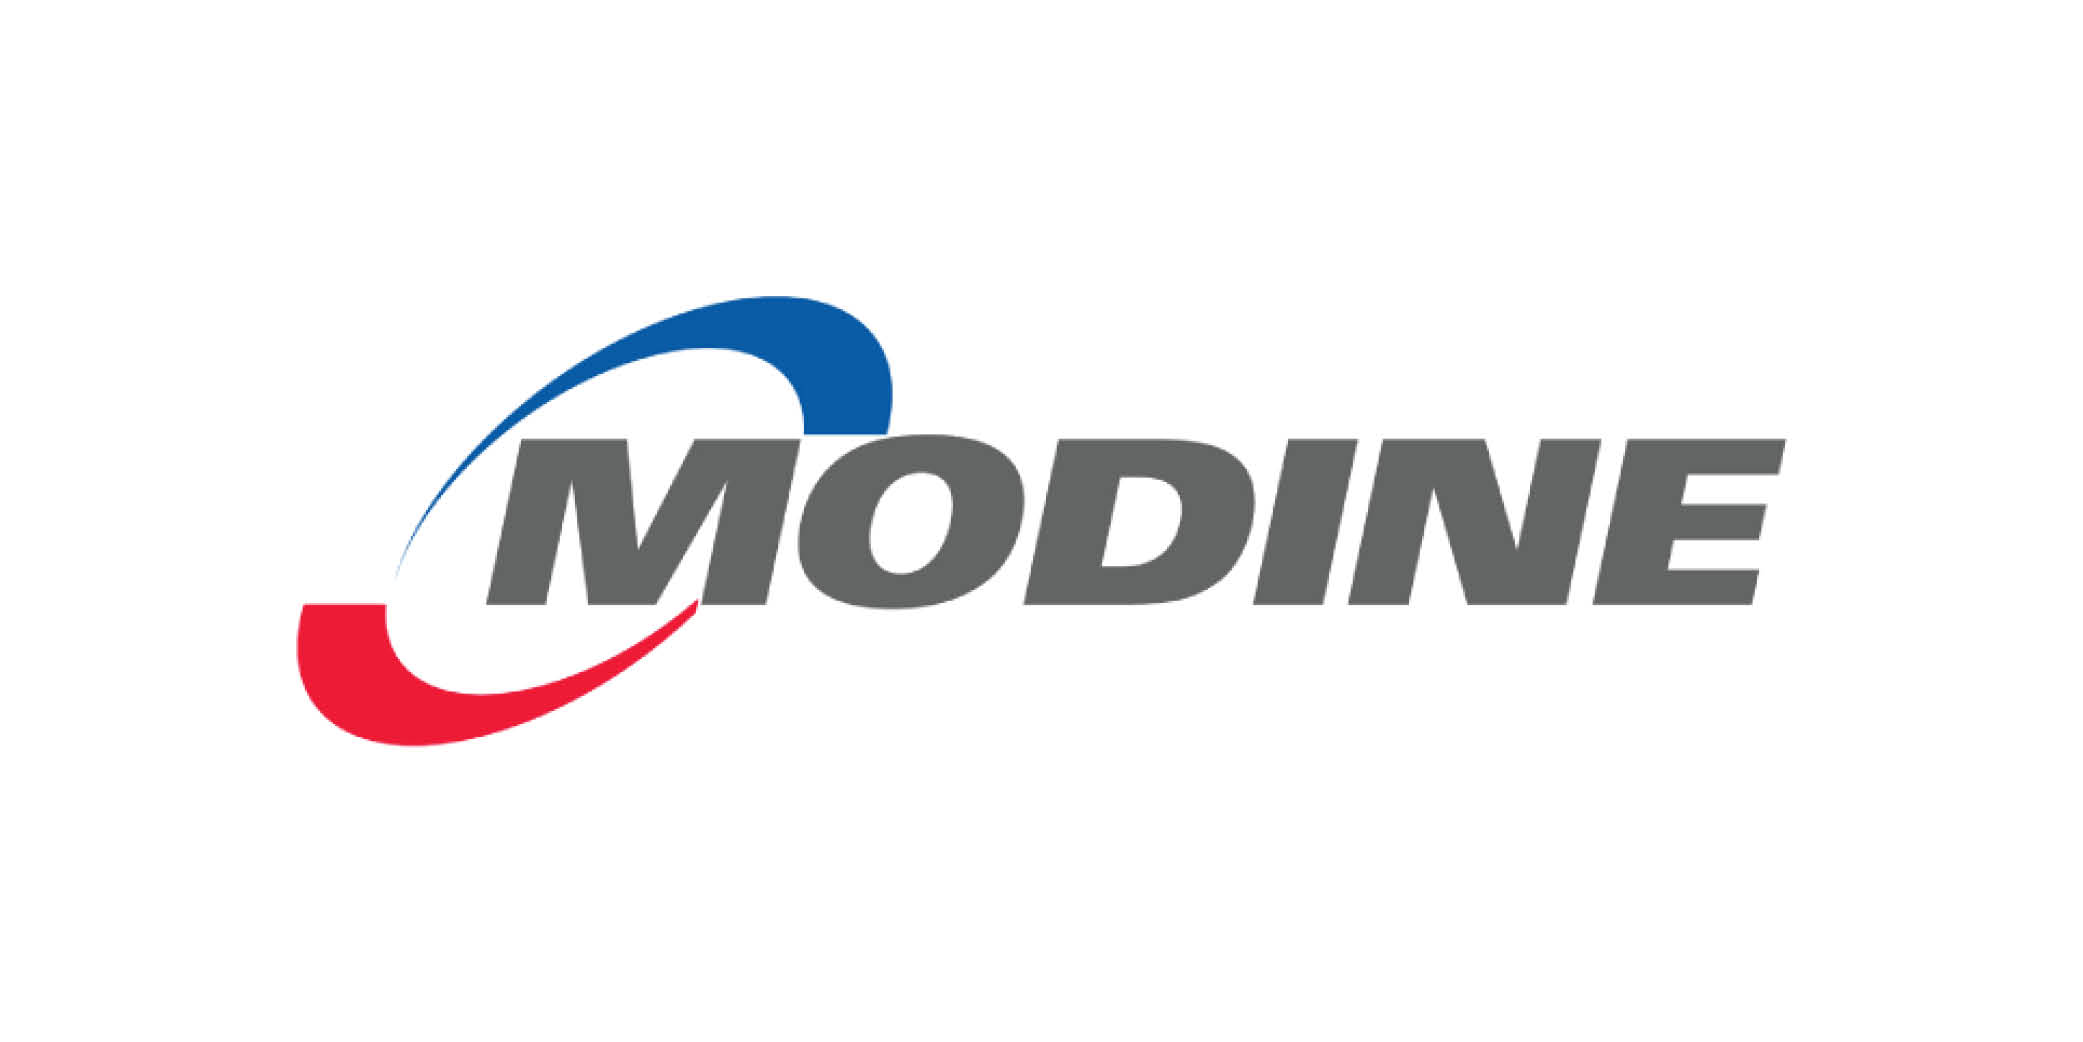 Modine logo